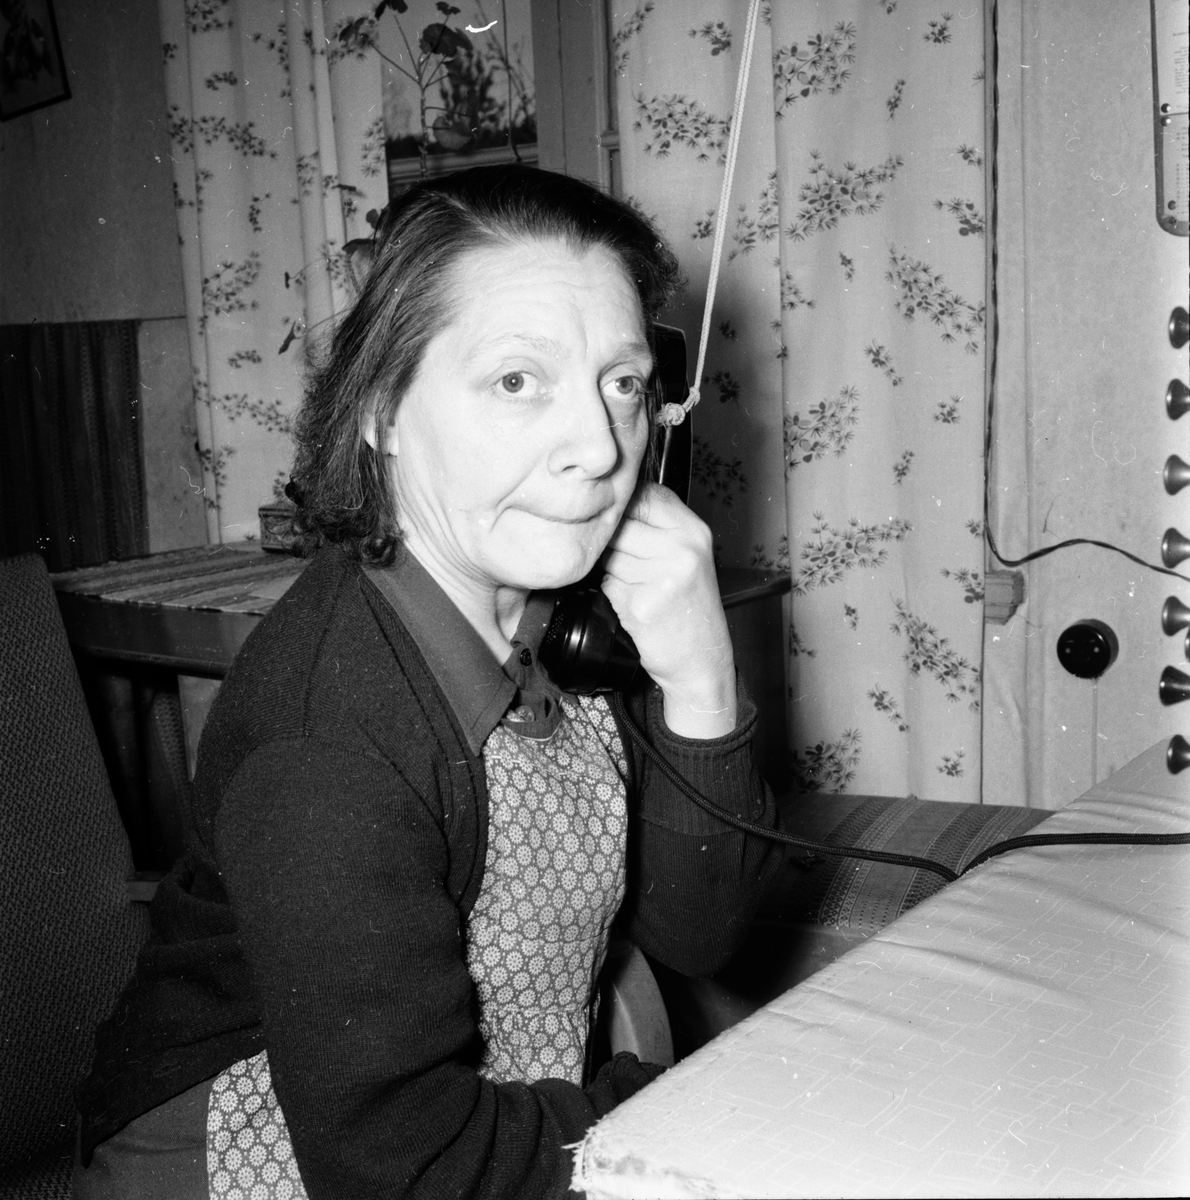 Telefonväxeln i Tönsen.
Mars 1956